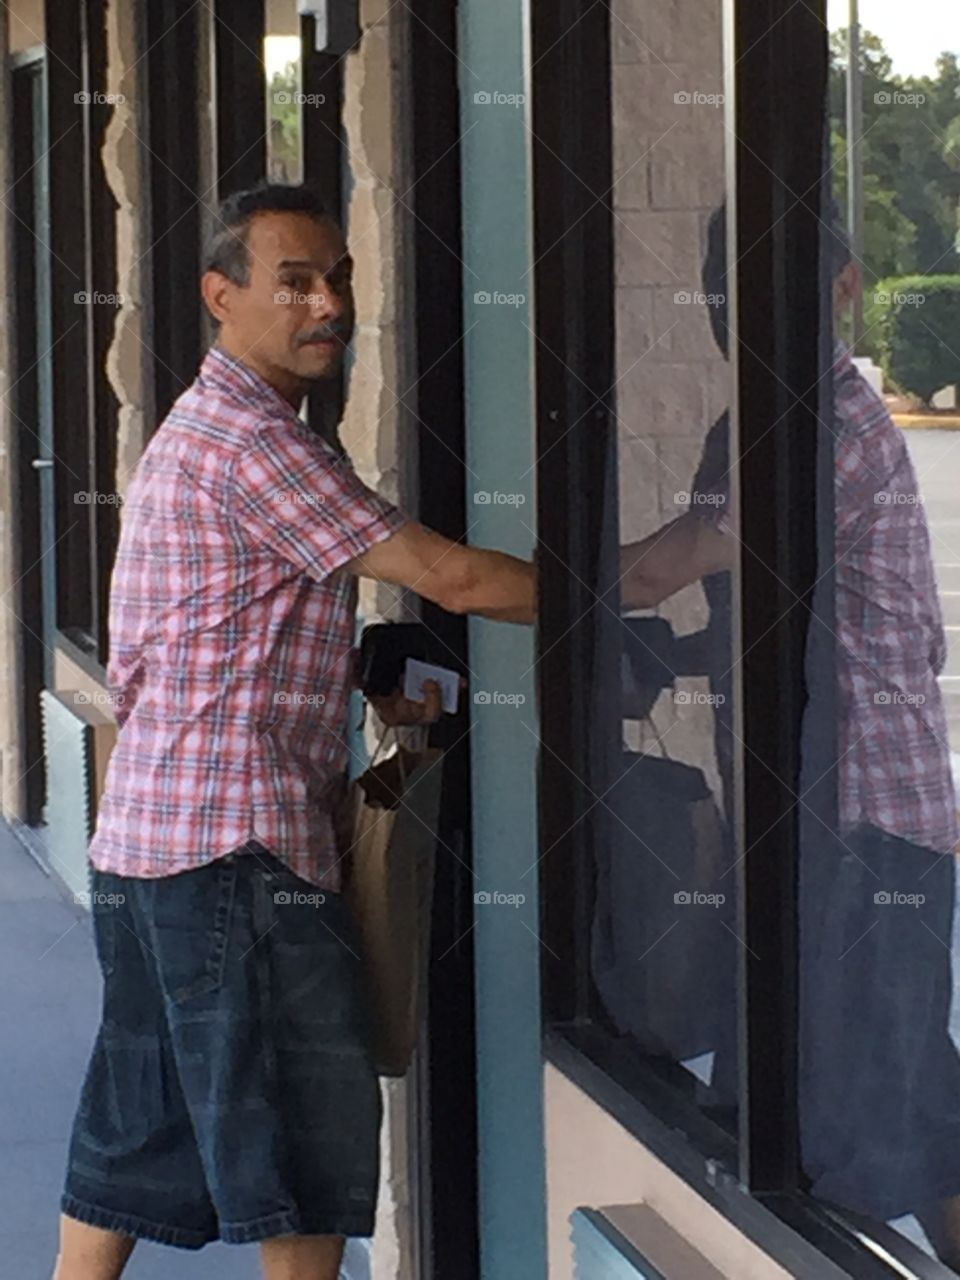 Entering The Days Inn. Deaf Hispanic Middle-Aged Man entering motel room in Davenport, Florida. August 2015.